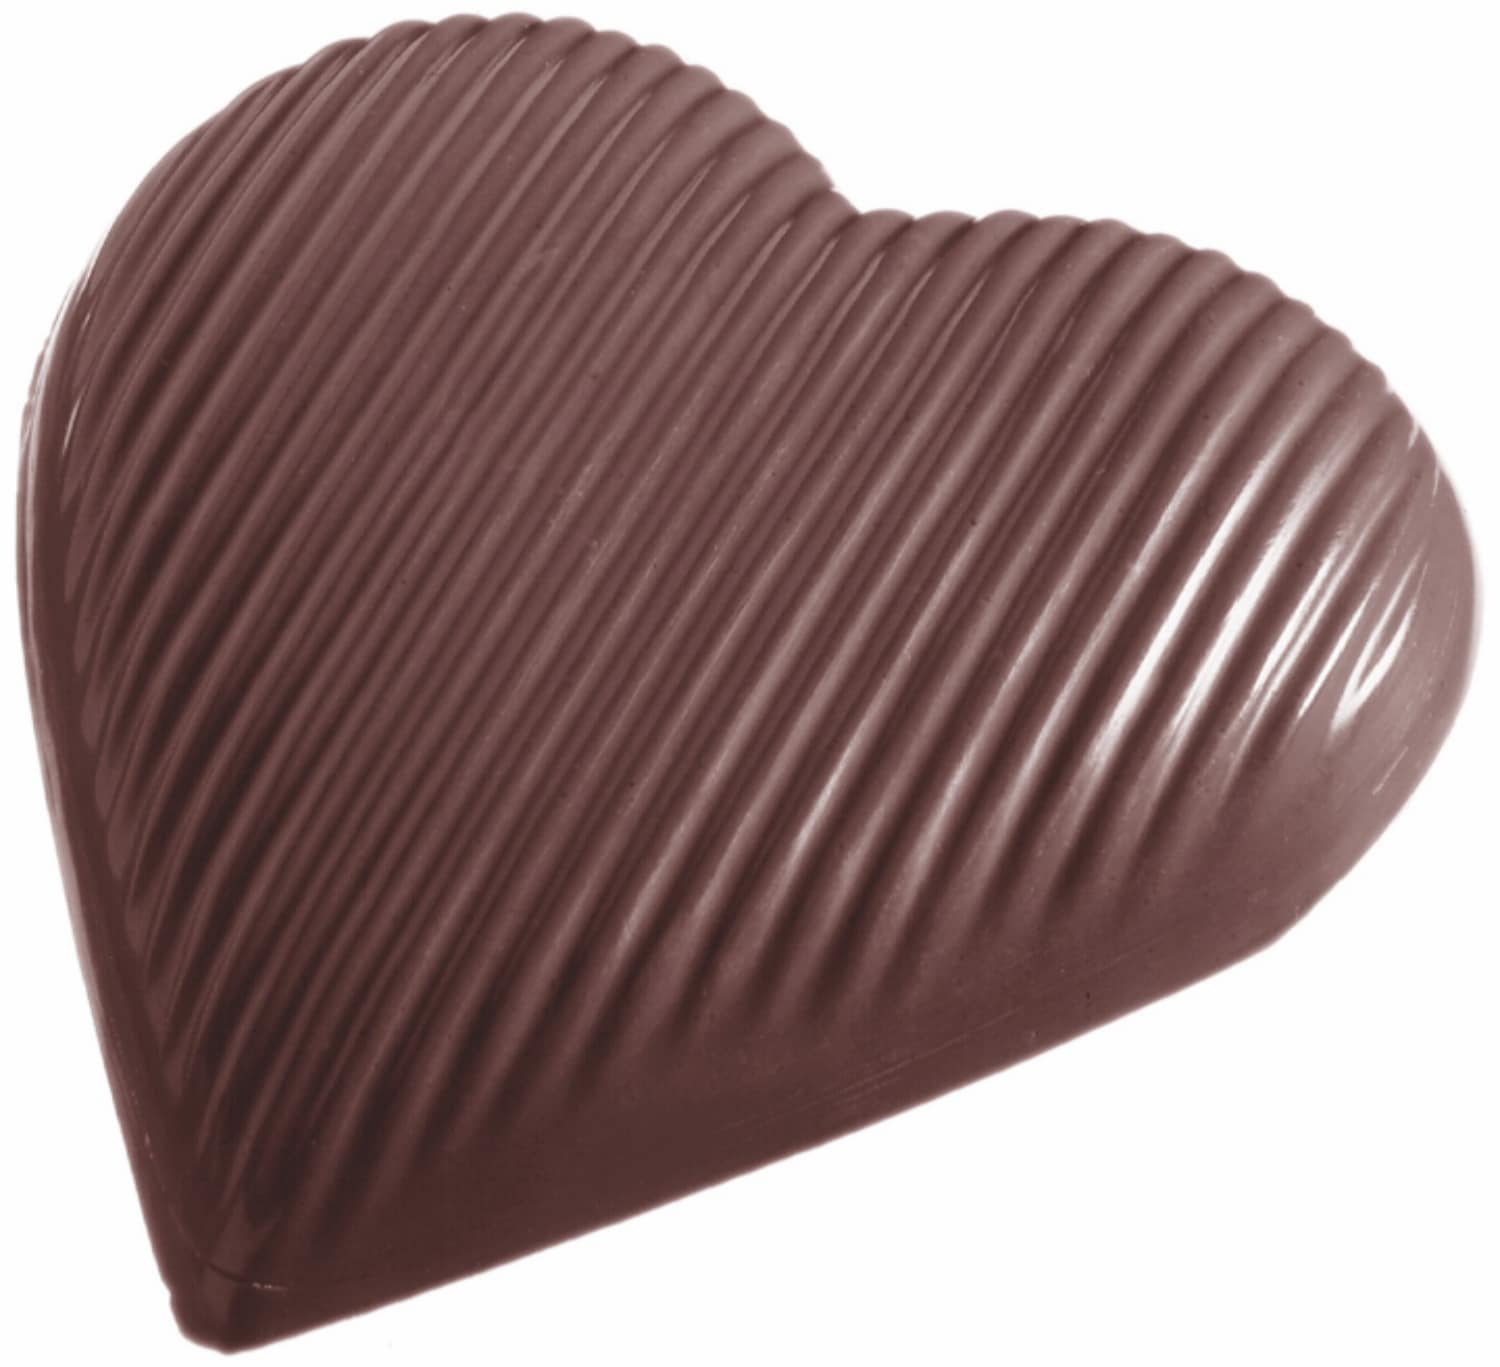 Schokoladenform "Herz" 422122